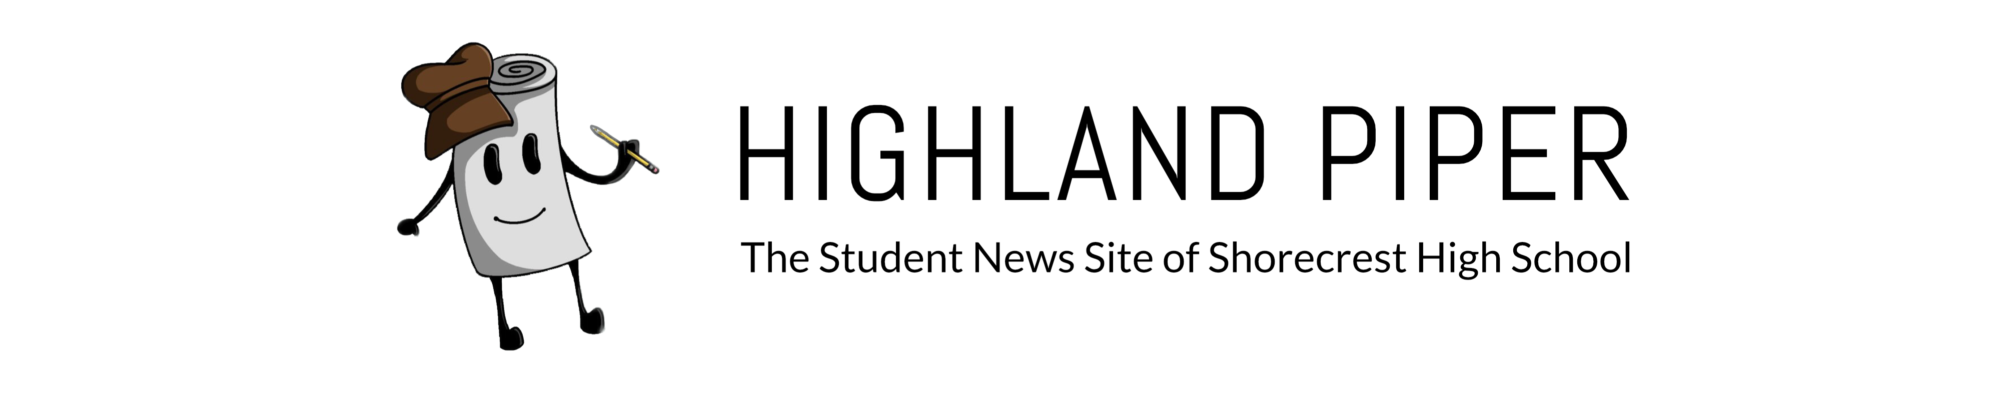 The Student News Site of Shorecrest High School